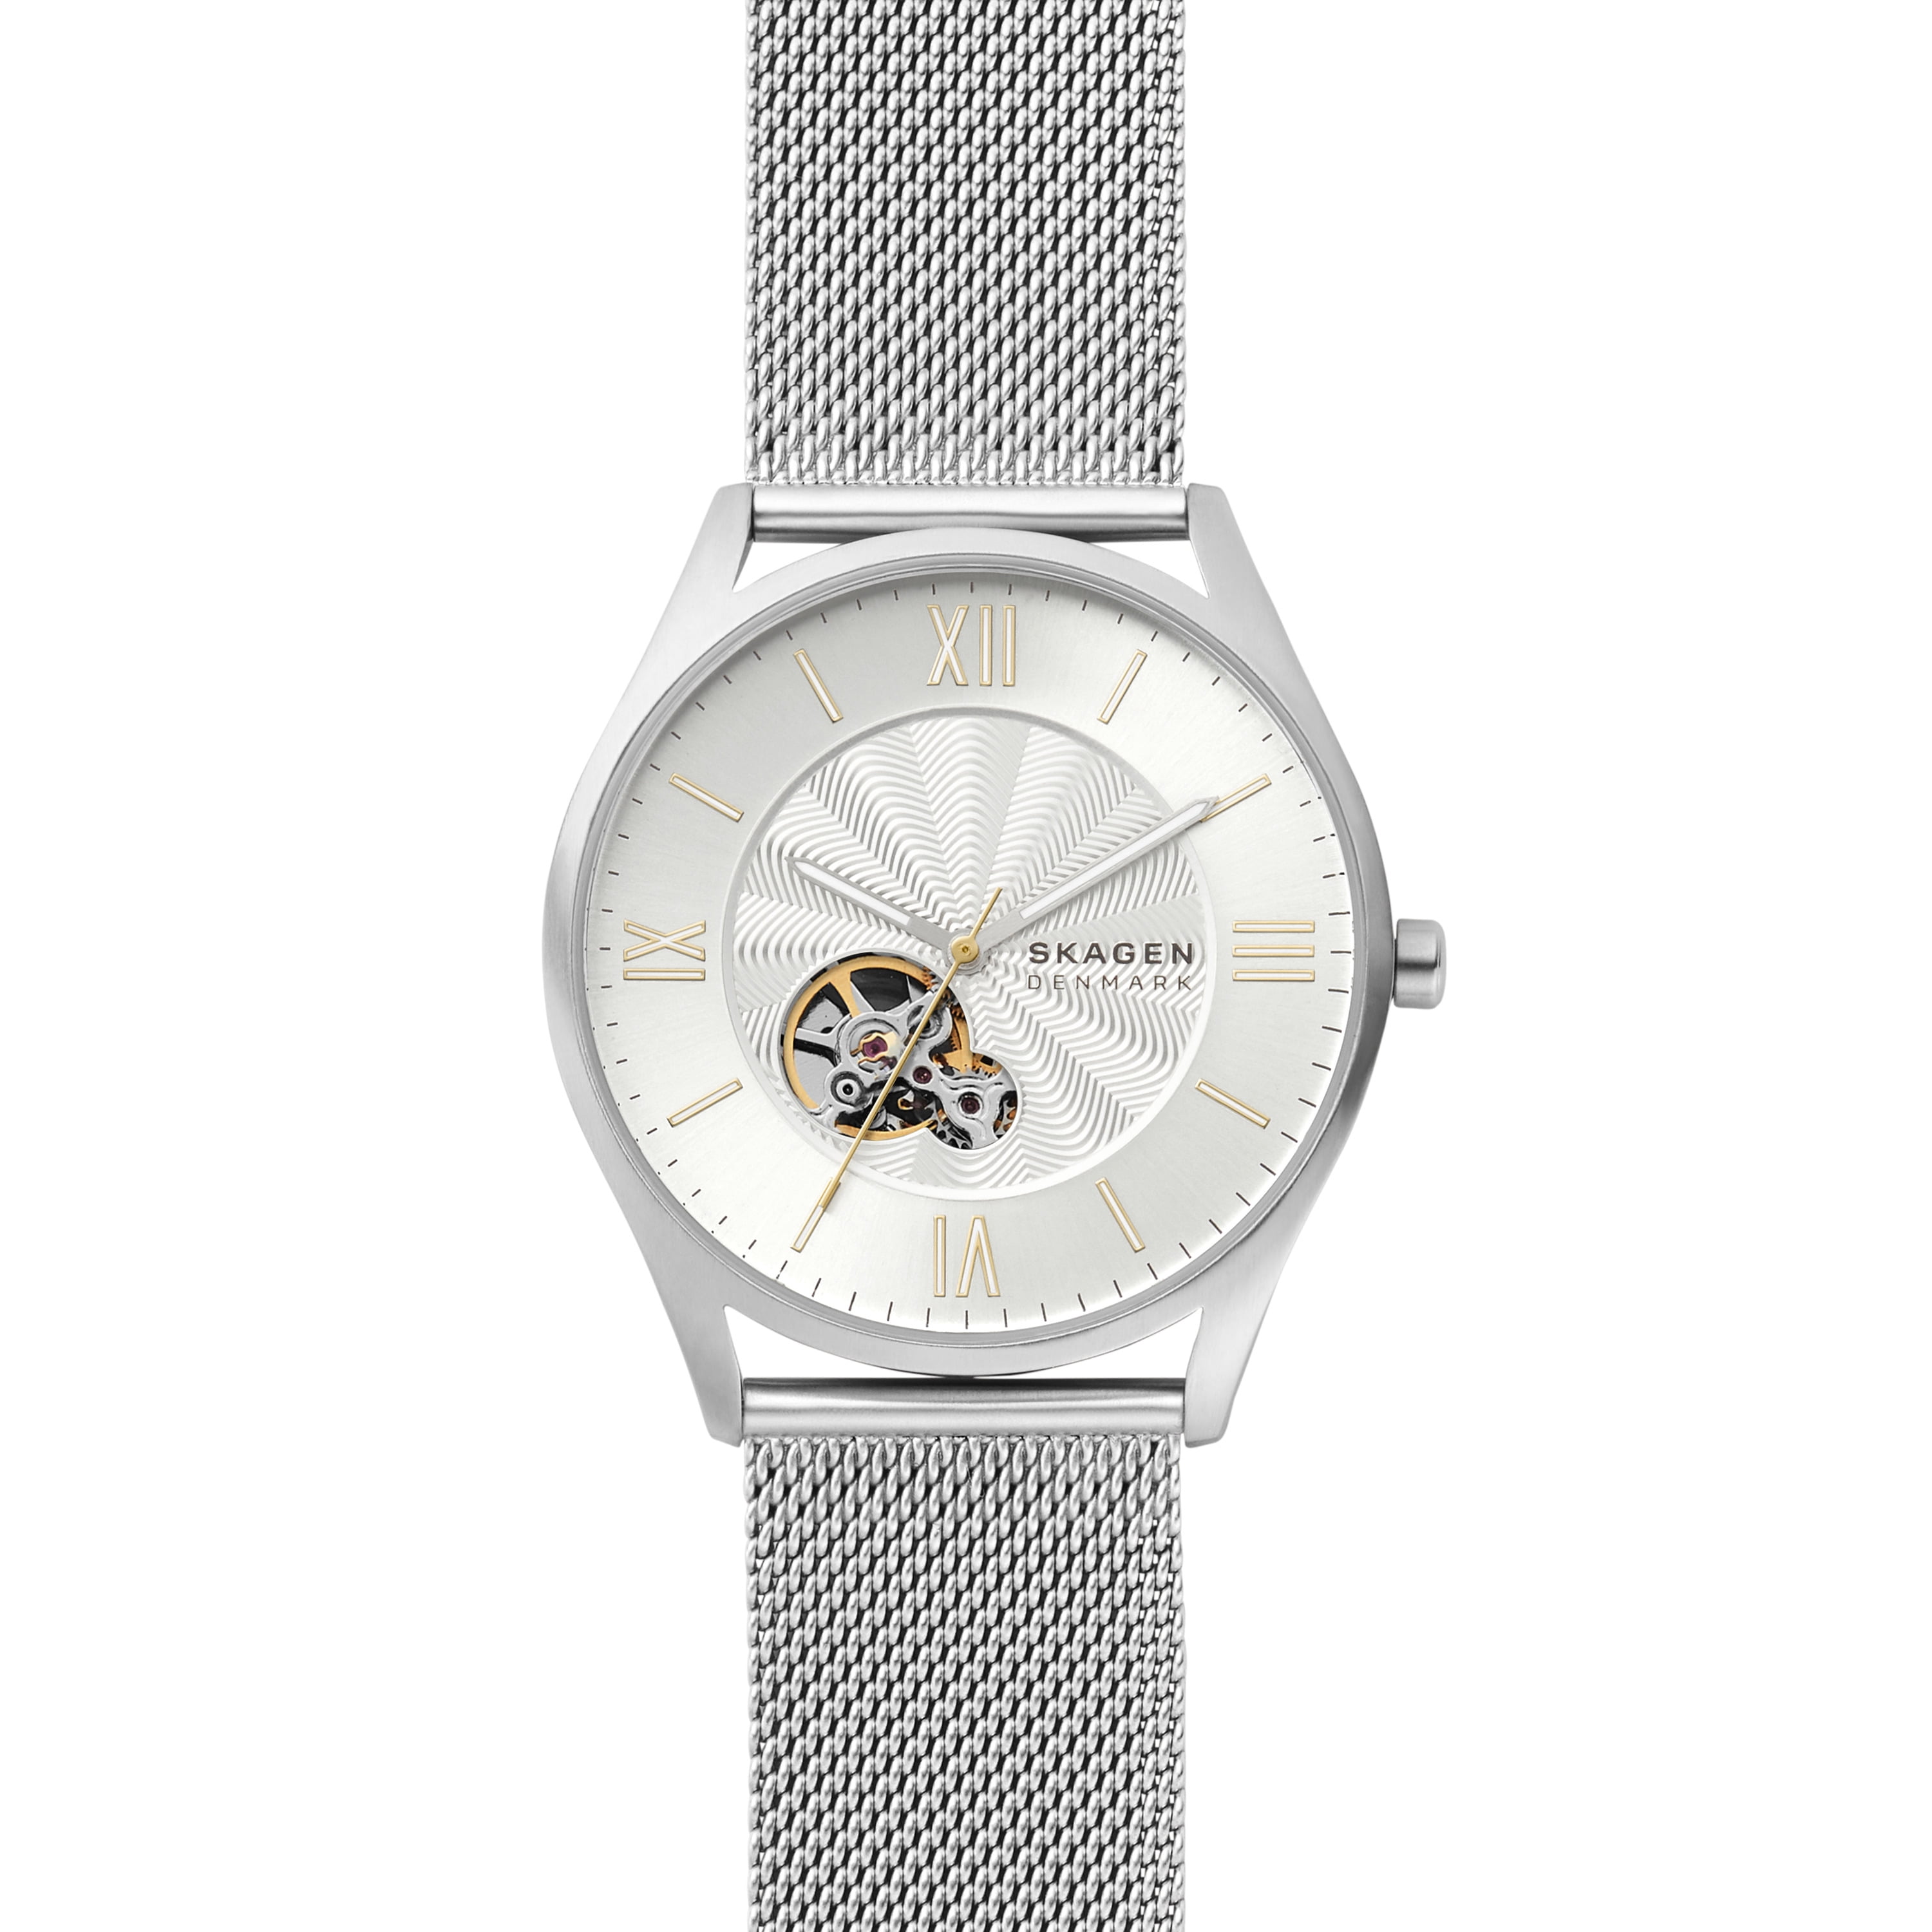 Skagen Men's Holst Automatic Silver-Tone Steel-Mesh Watch (SKW6711)